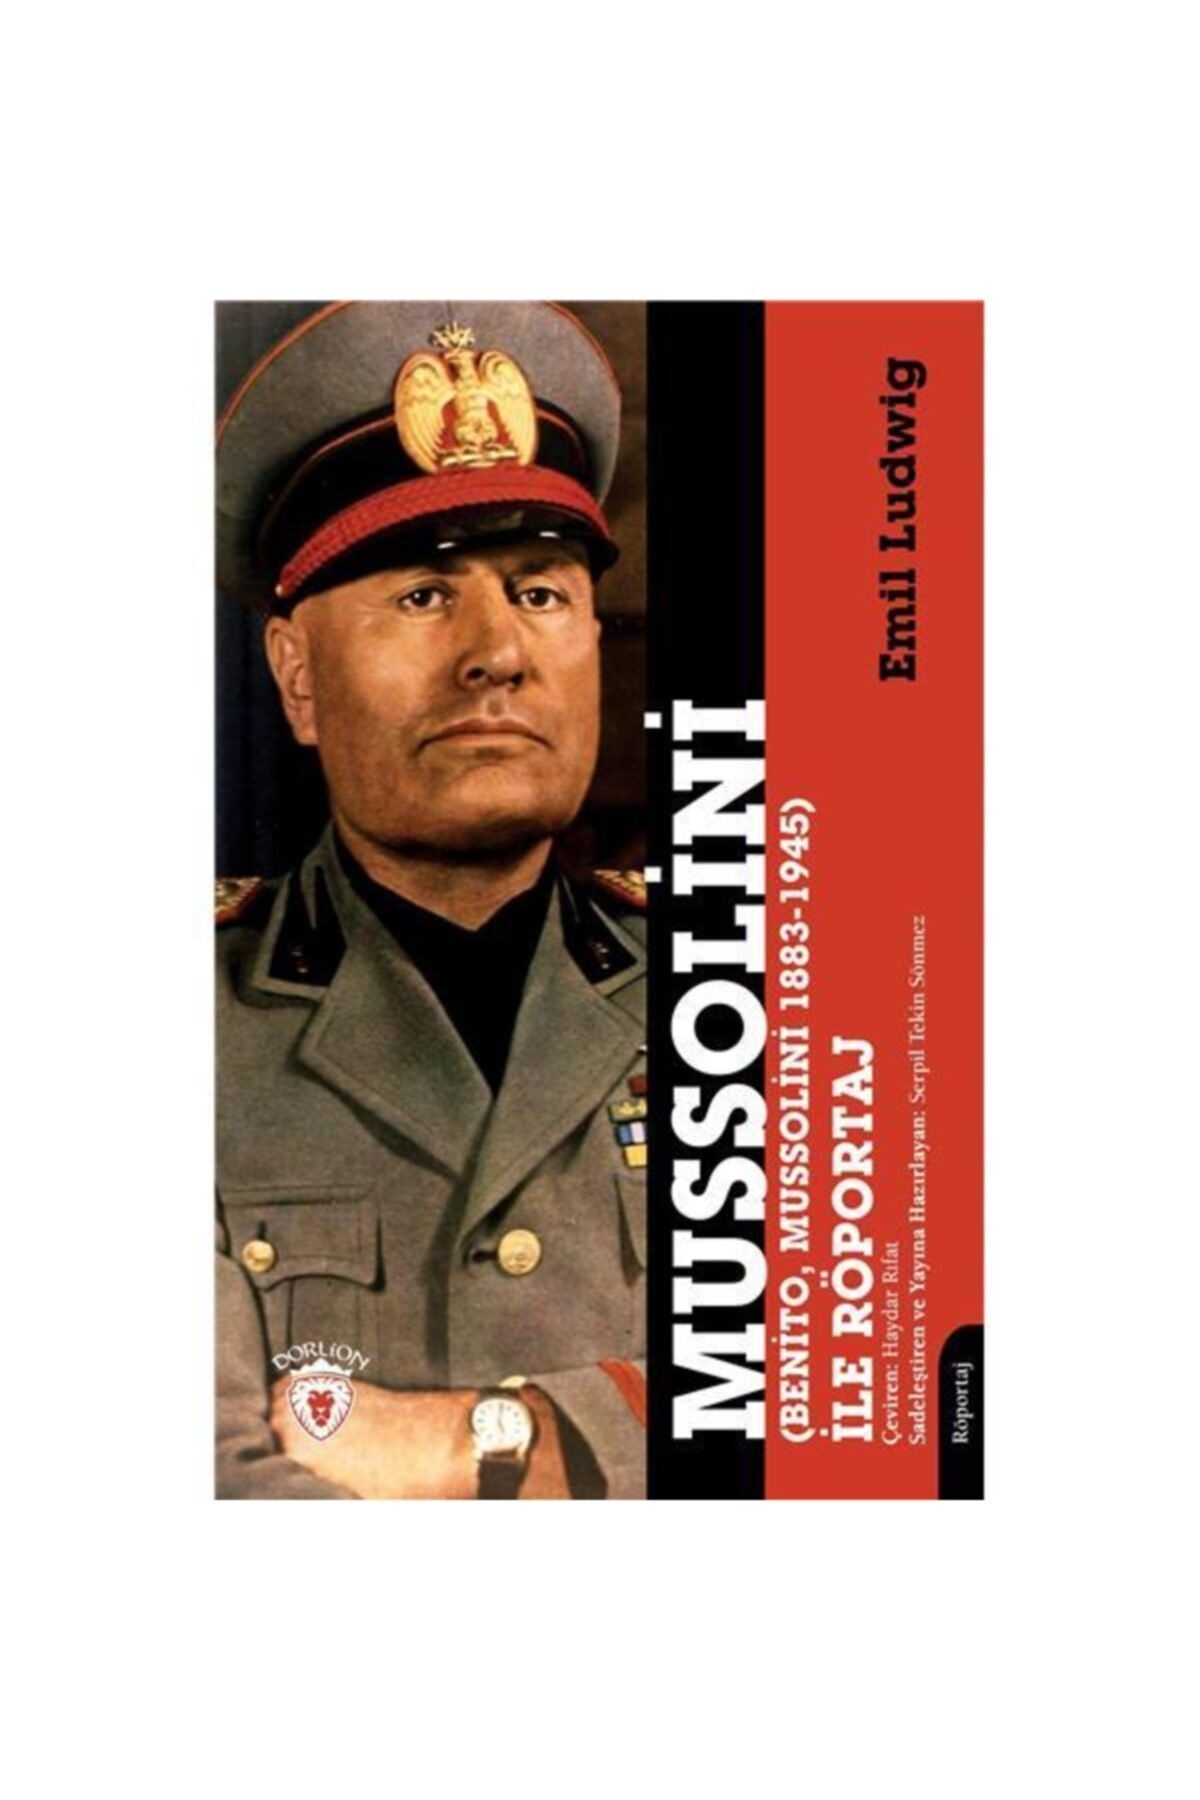 Dorlion Yayınları Mussolini (benito, Mussolini 1883-1945) Ile Röportaj